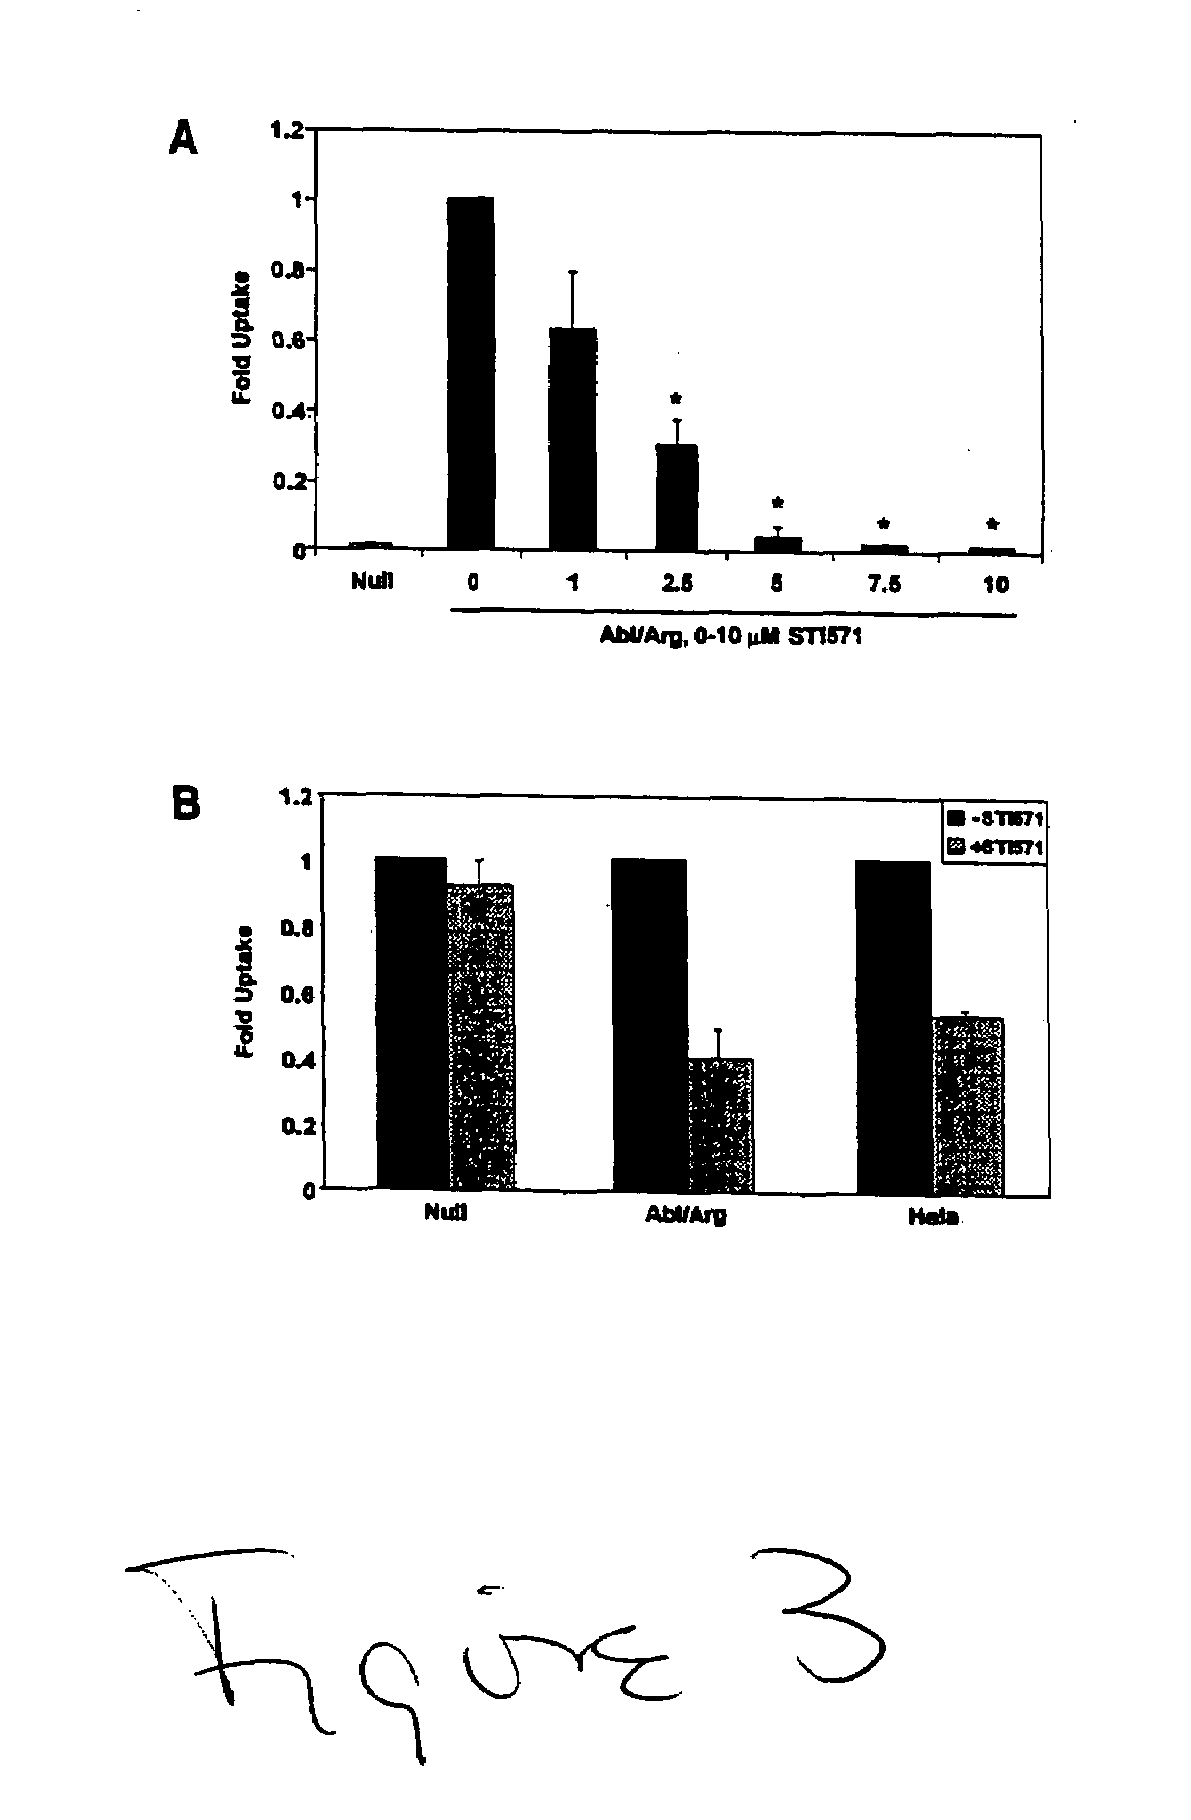 Method of treating infection with ABl tyrosine kinase inhibitors